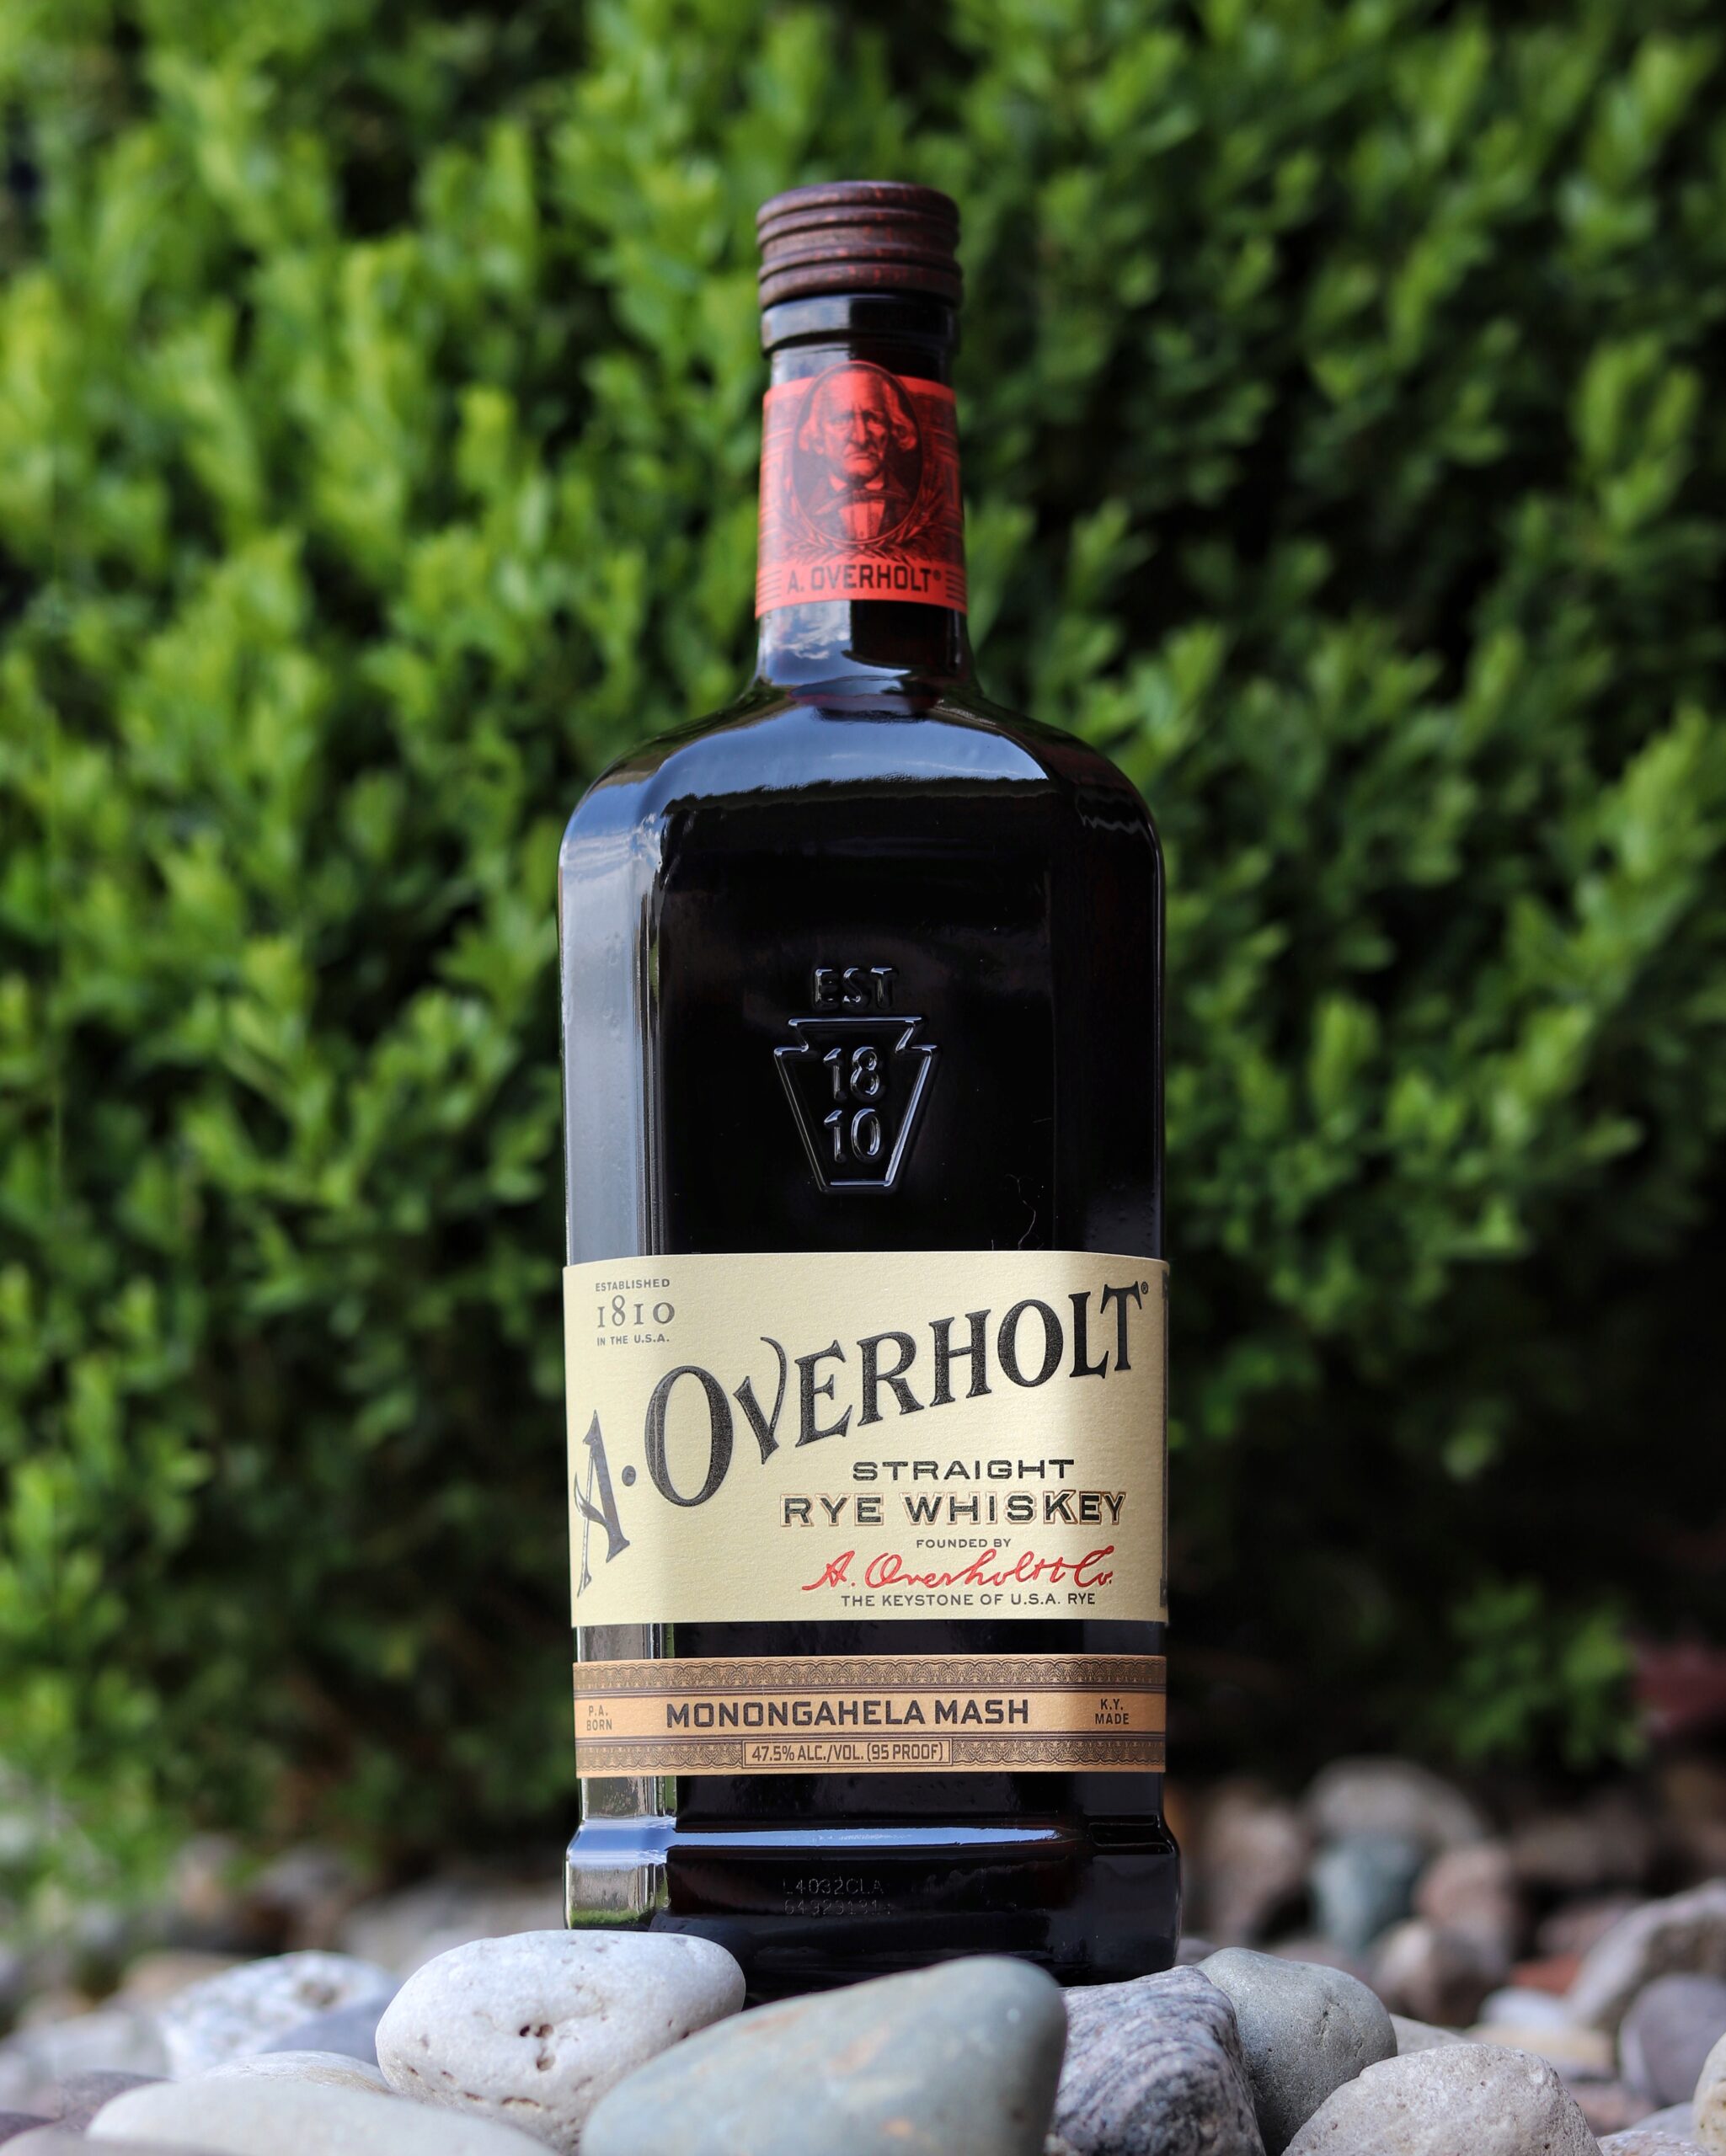 New A. Overholt Monongahela Mash Straight Rye Whiskey Reviewed